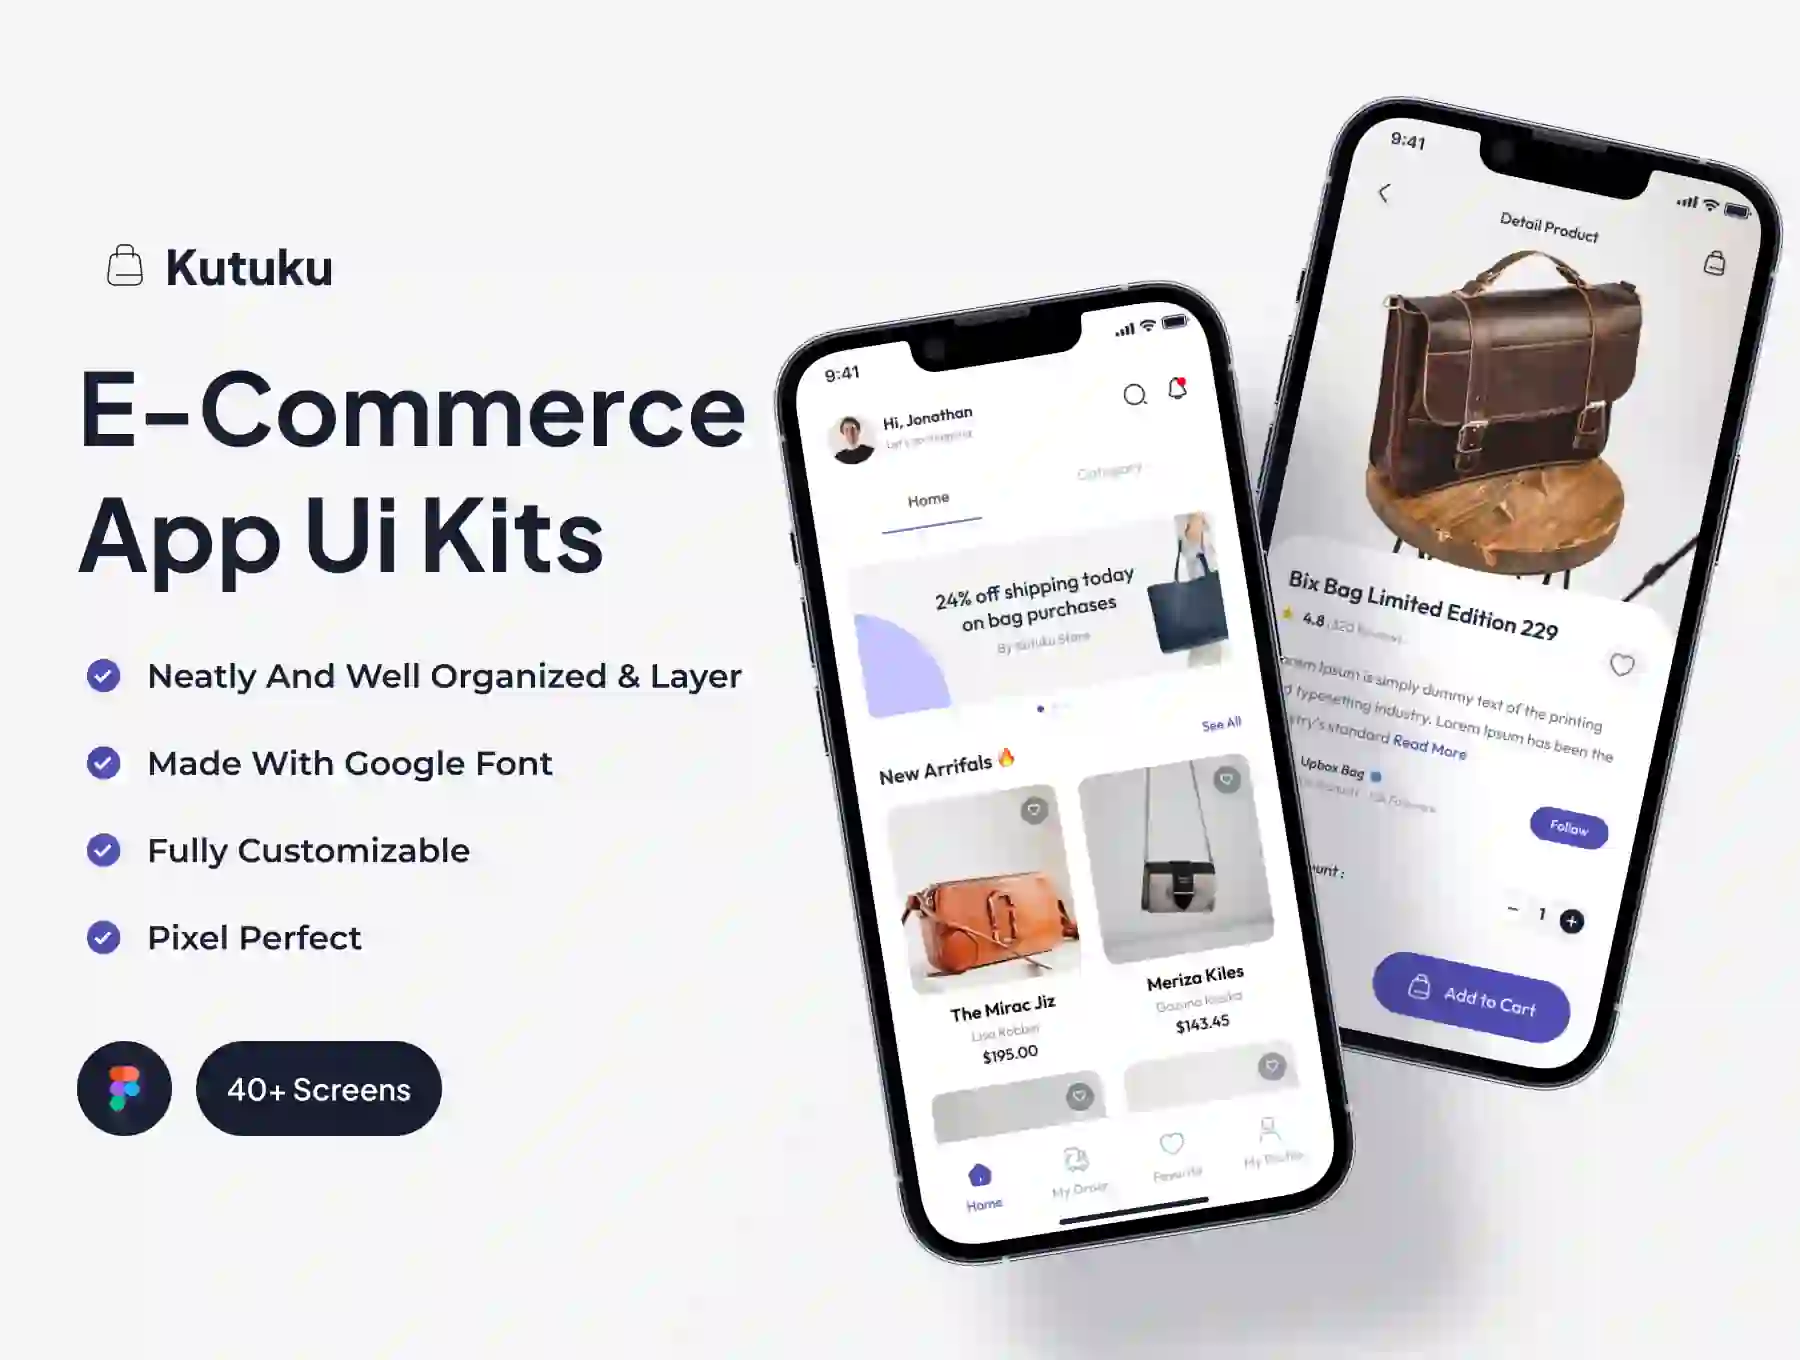 Kutuku - E-Commerce App Ui Kits